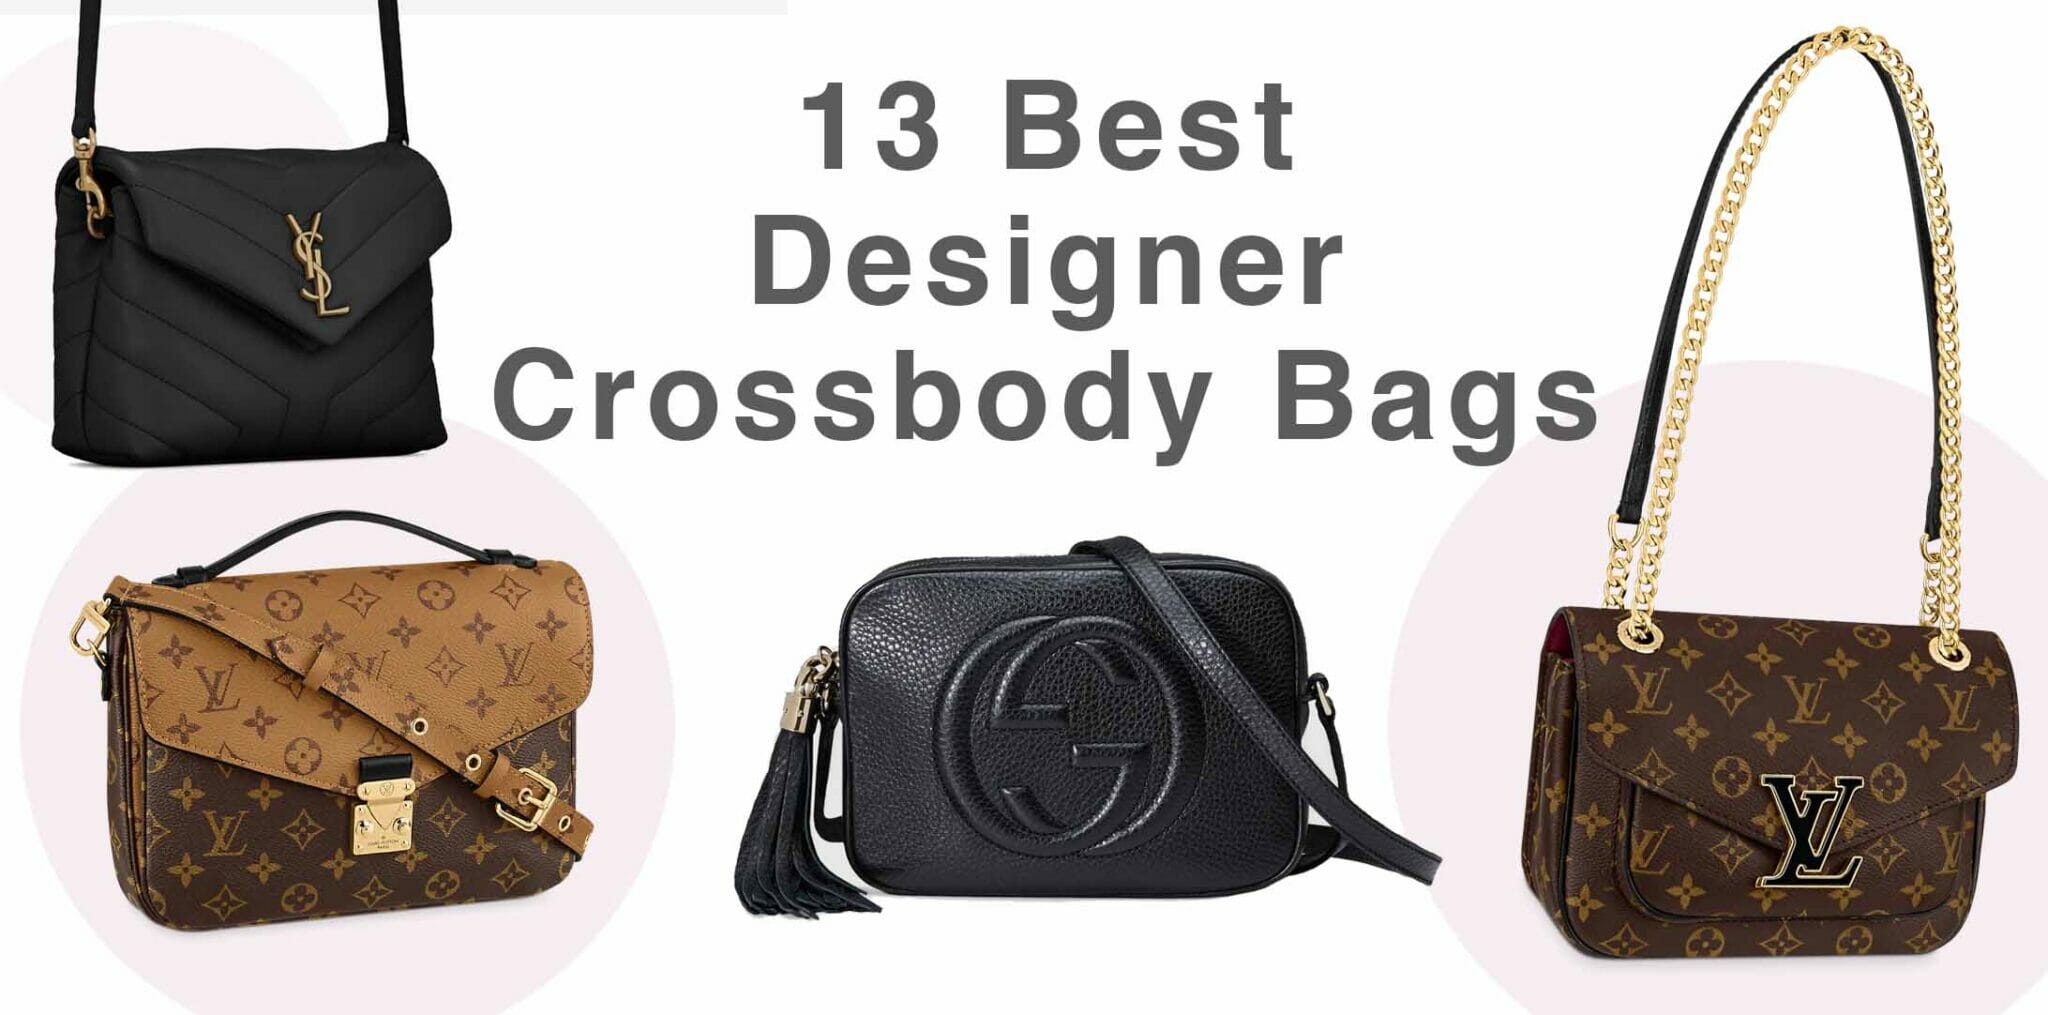 13 Best Designer Crossbody Bags with Video Handbagholic